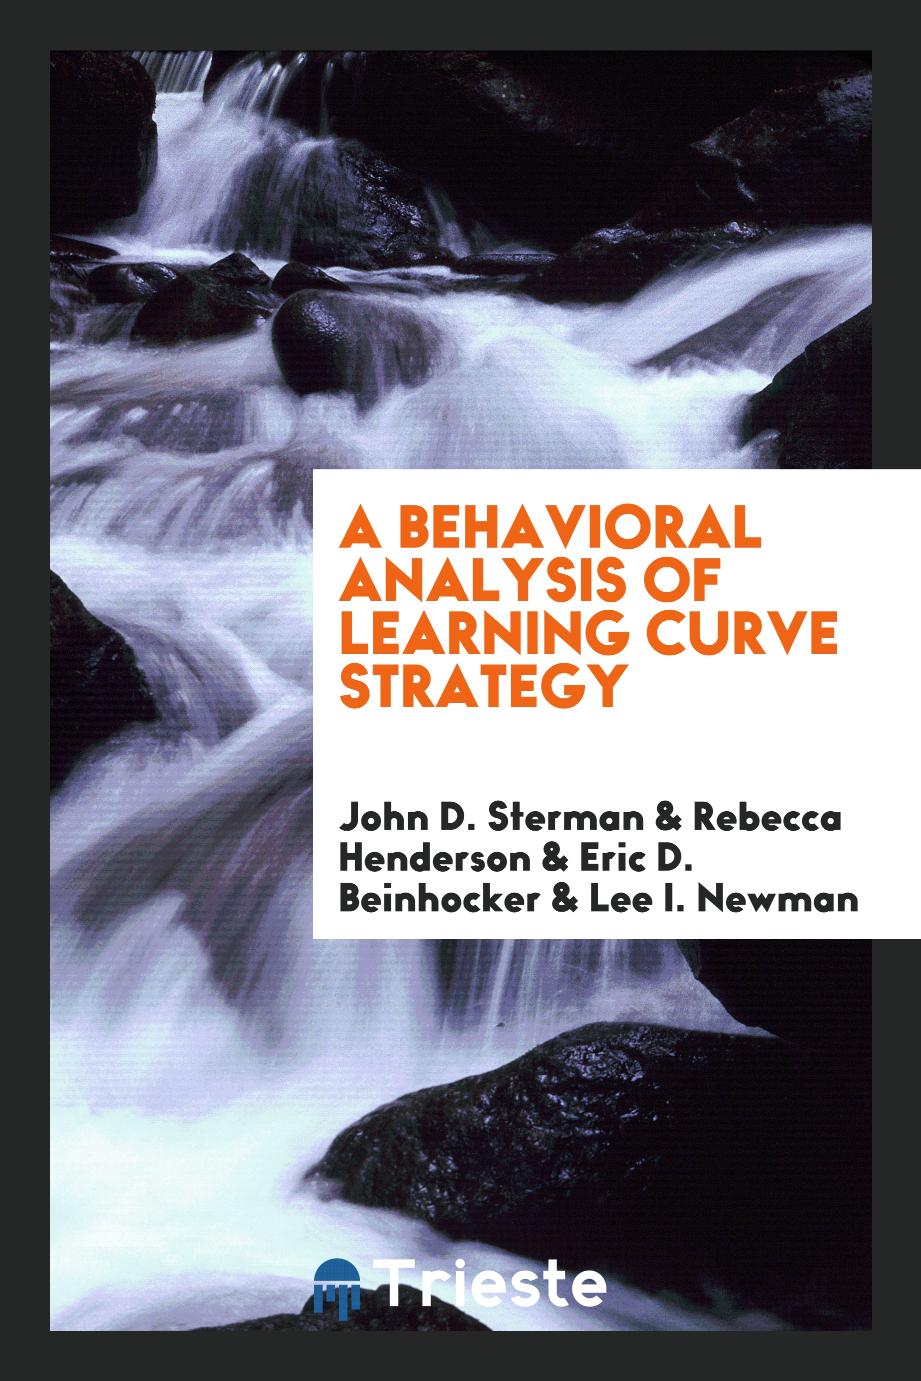 John D. Sterman, Rebecca Henderson, Eric D. Beinhocker, Lee I. Newman - A behavioral analysis of learning curve strategy